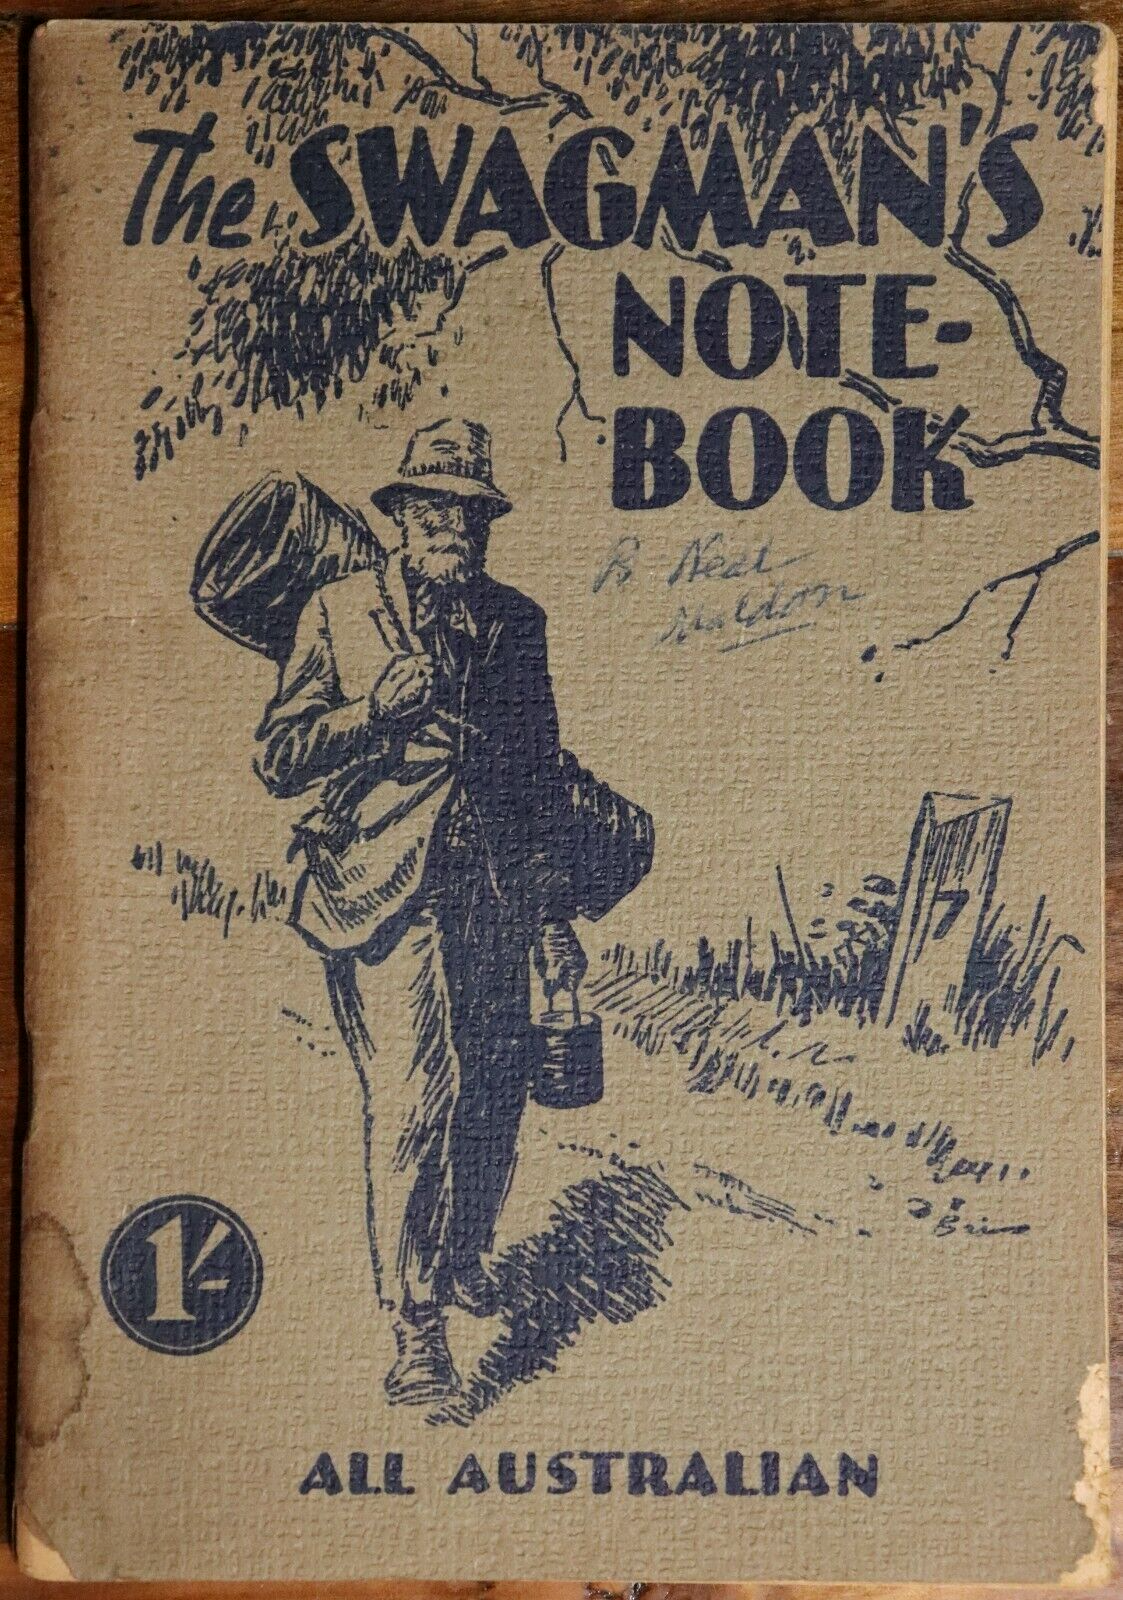 The Swagman's Note Book by C Barrett - 1943 - Australian History Book